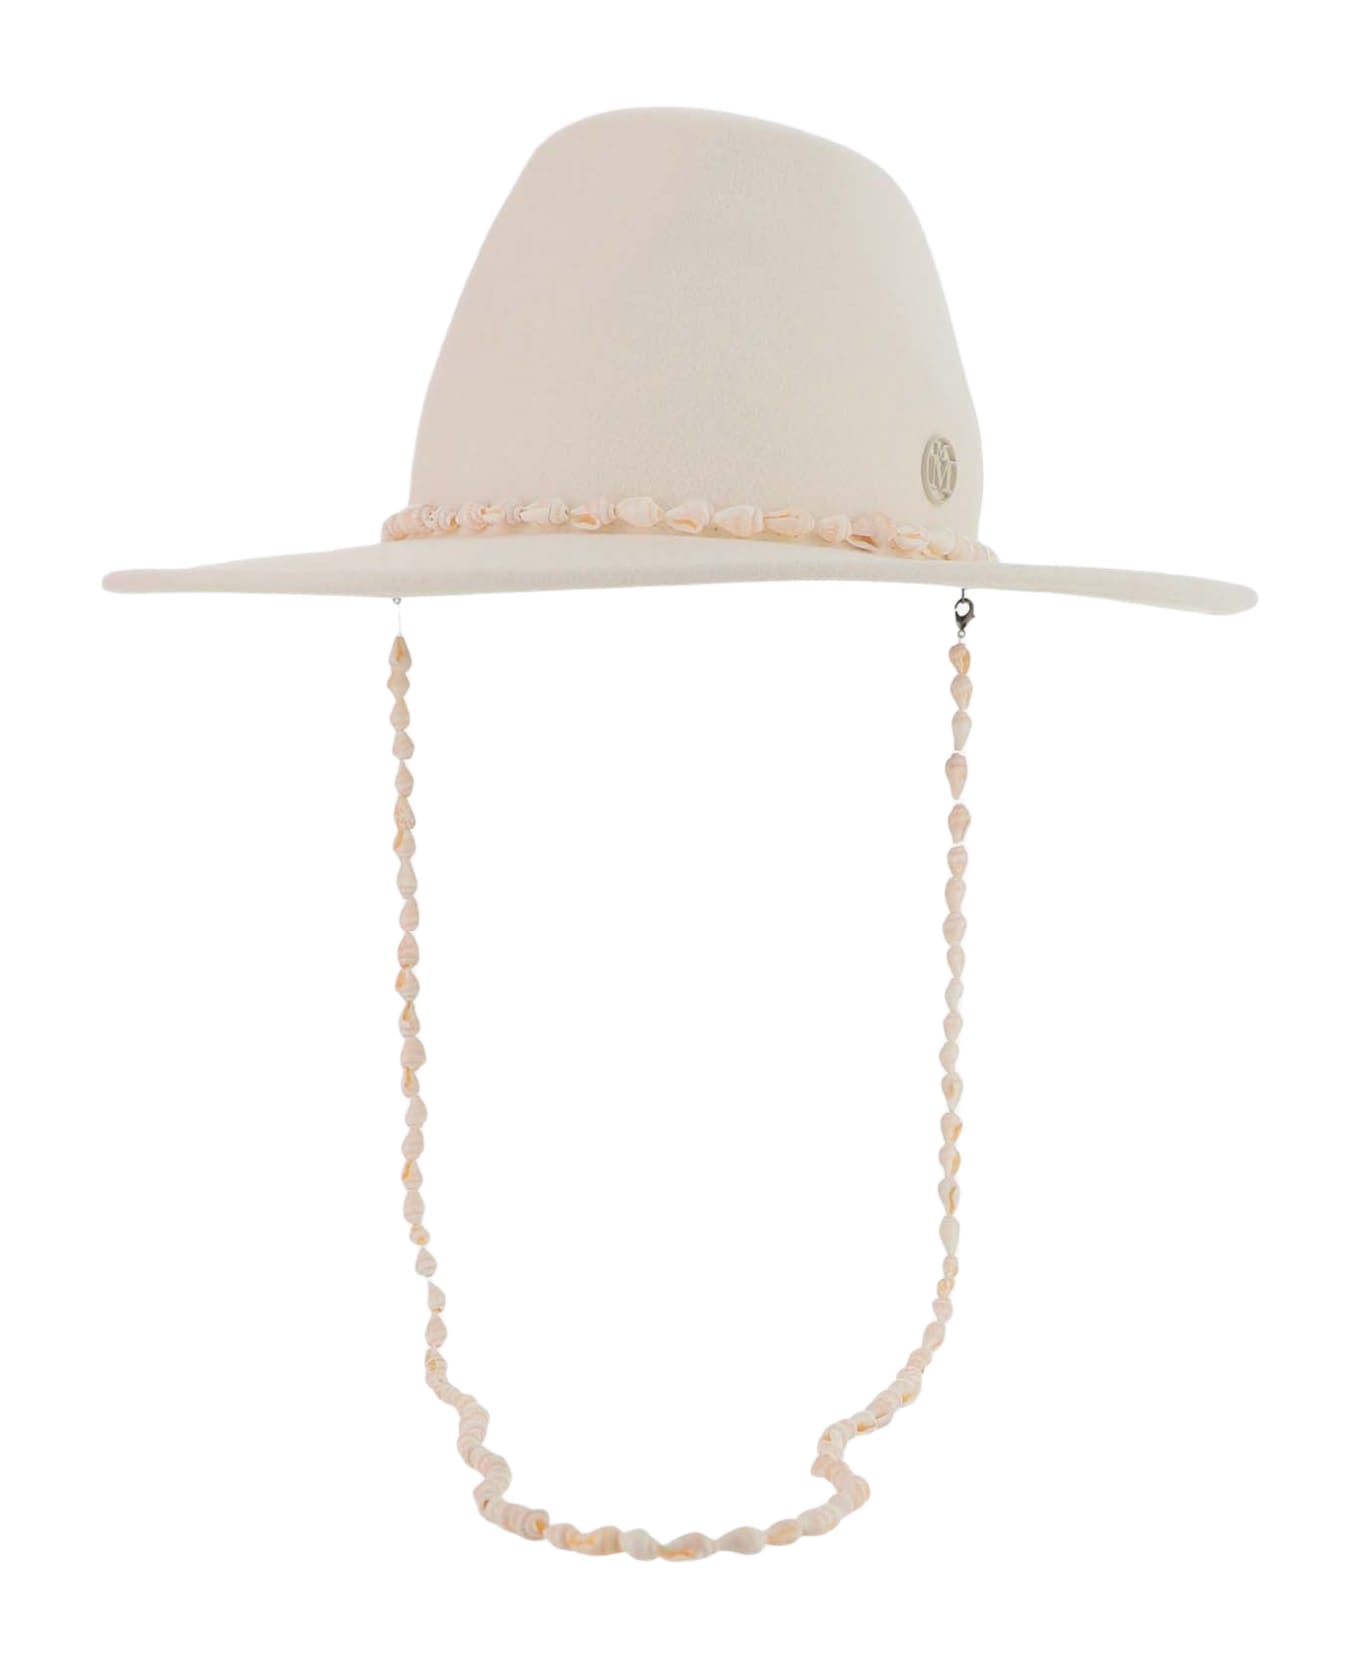 Maison Michel Kyra Wool Felt Hat With Shells - White 帽子